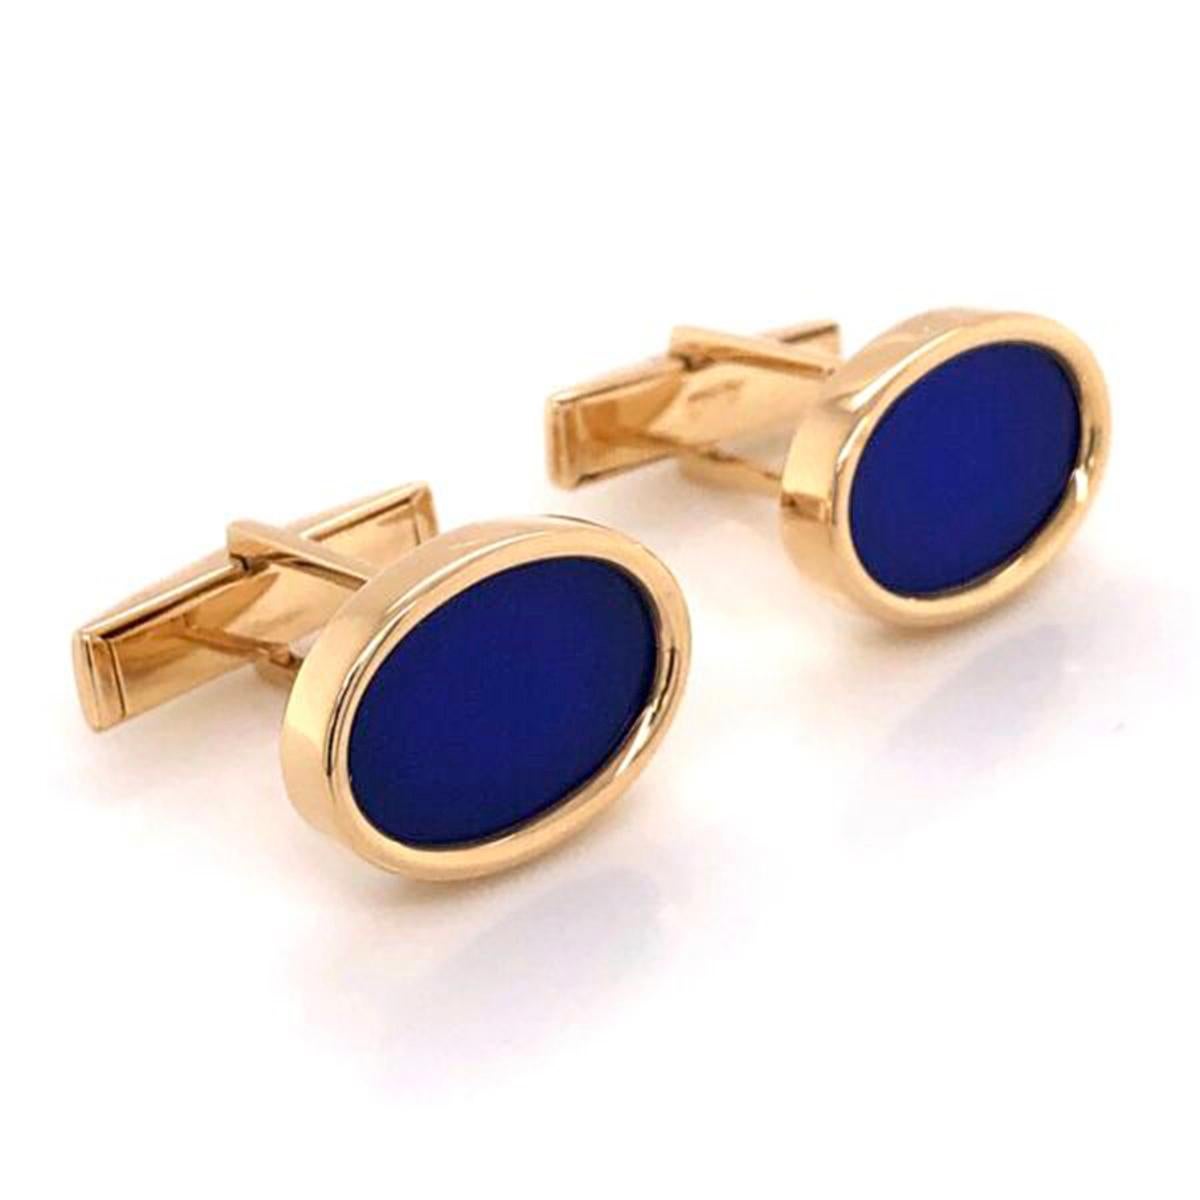 Modernist Stylish Classic Blue Lapis Lazuli Gold Cufflinks Estate Fine Jewelry